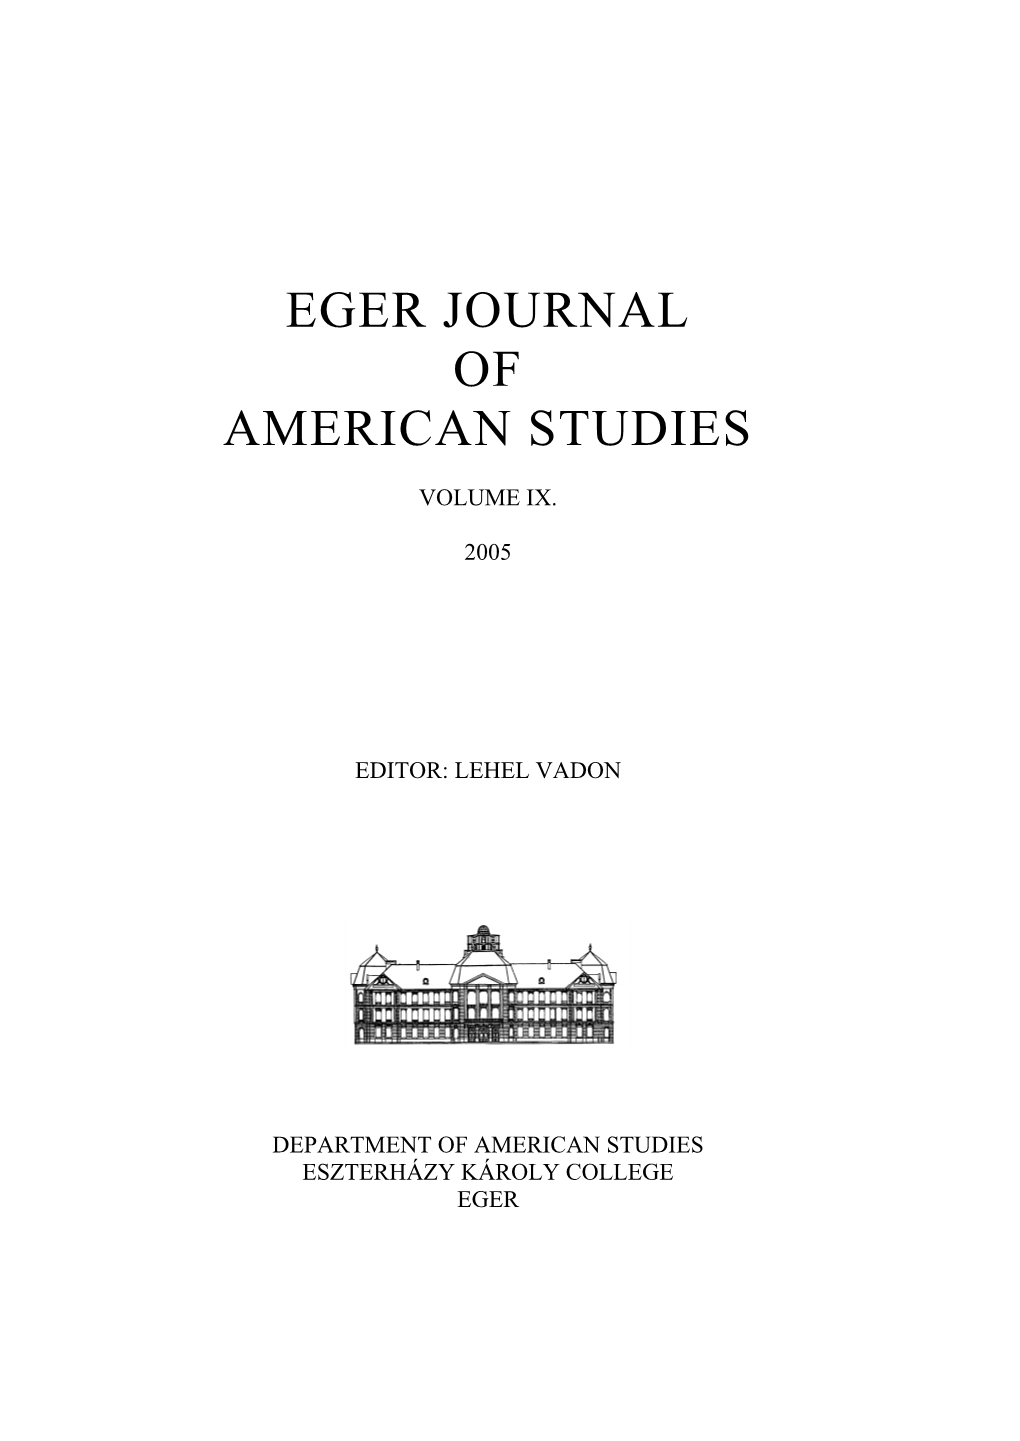 Eger Journal of American Studies